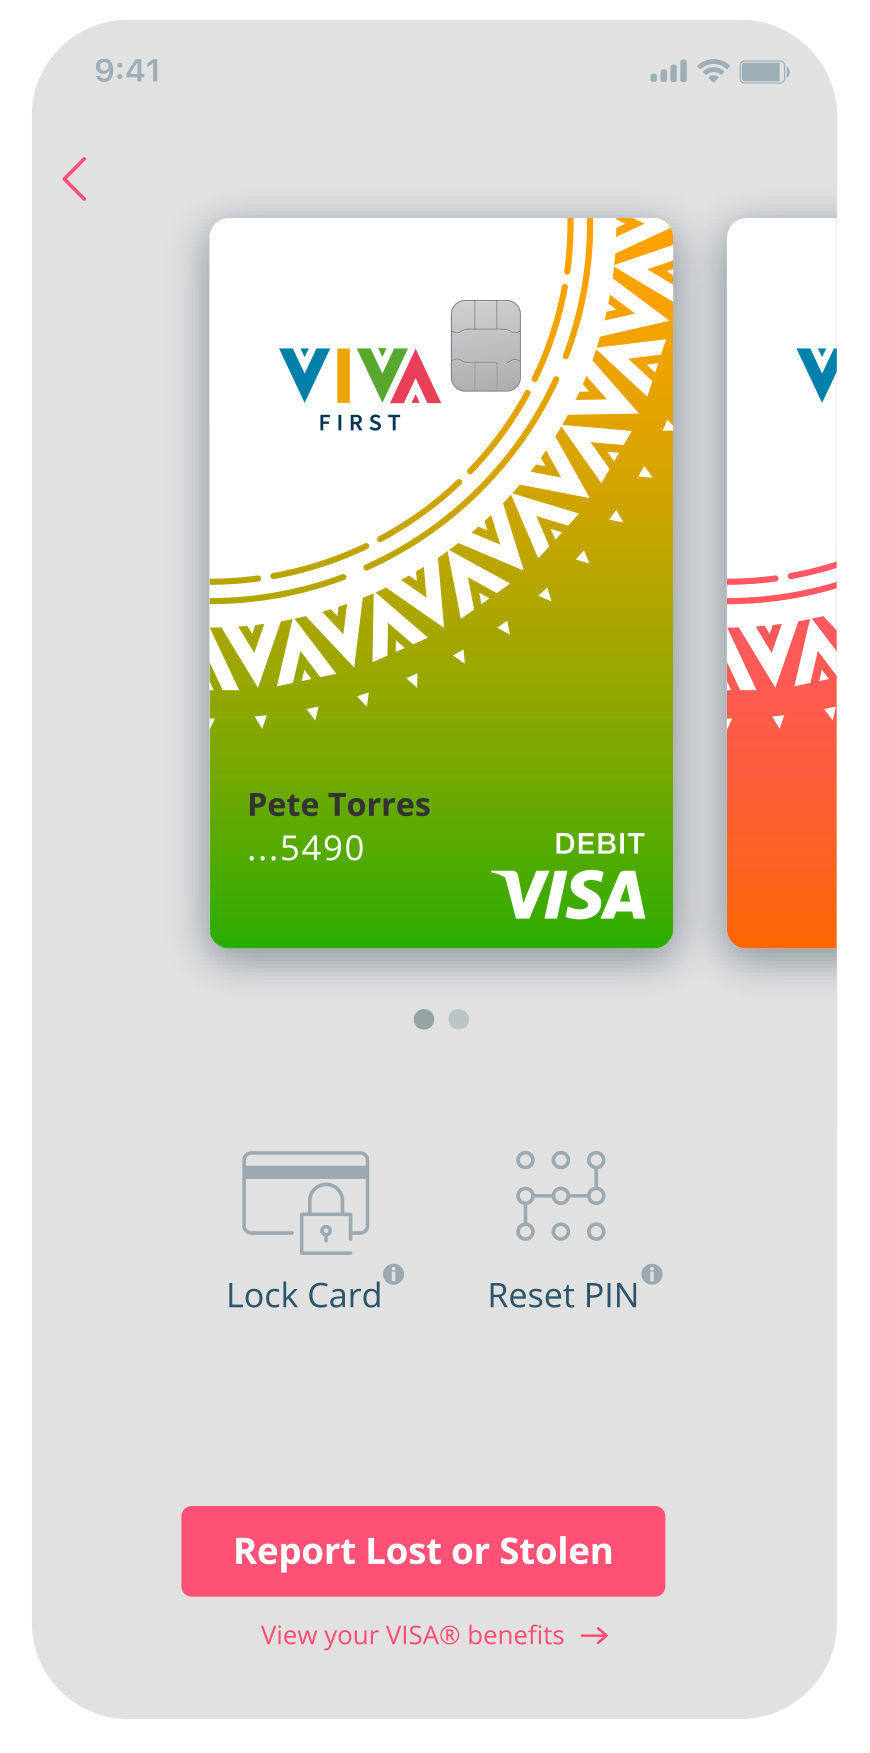 Viva First Mobile App Debit Card UI